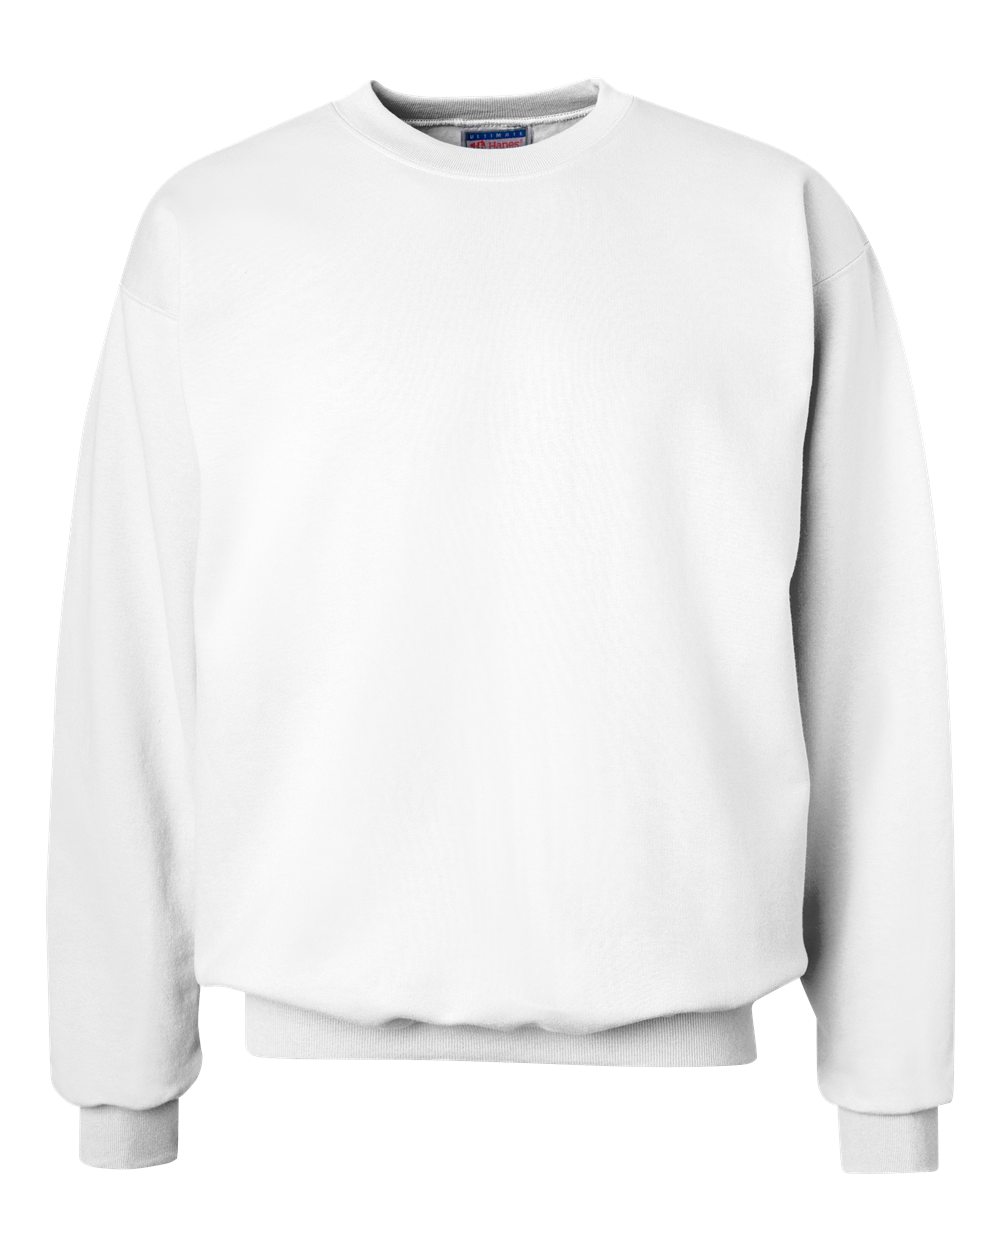 3XL New Hanes PrintProXP Sweater Ultimate Cotton Crewneck Sweatshirt S F260 